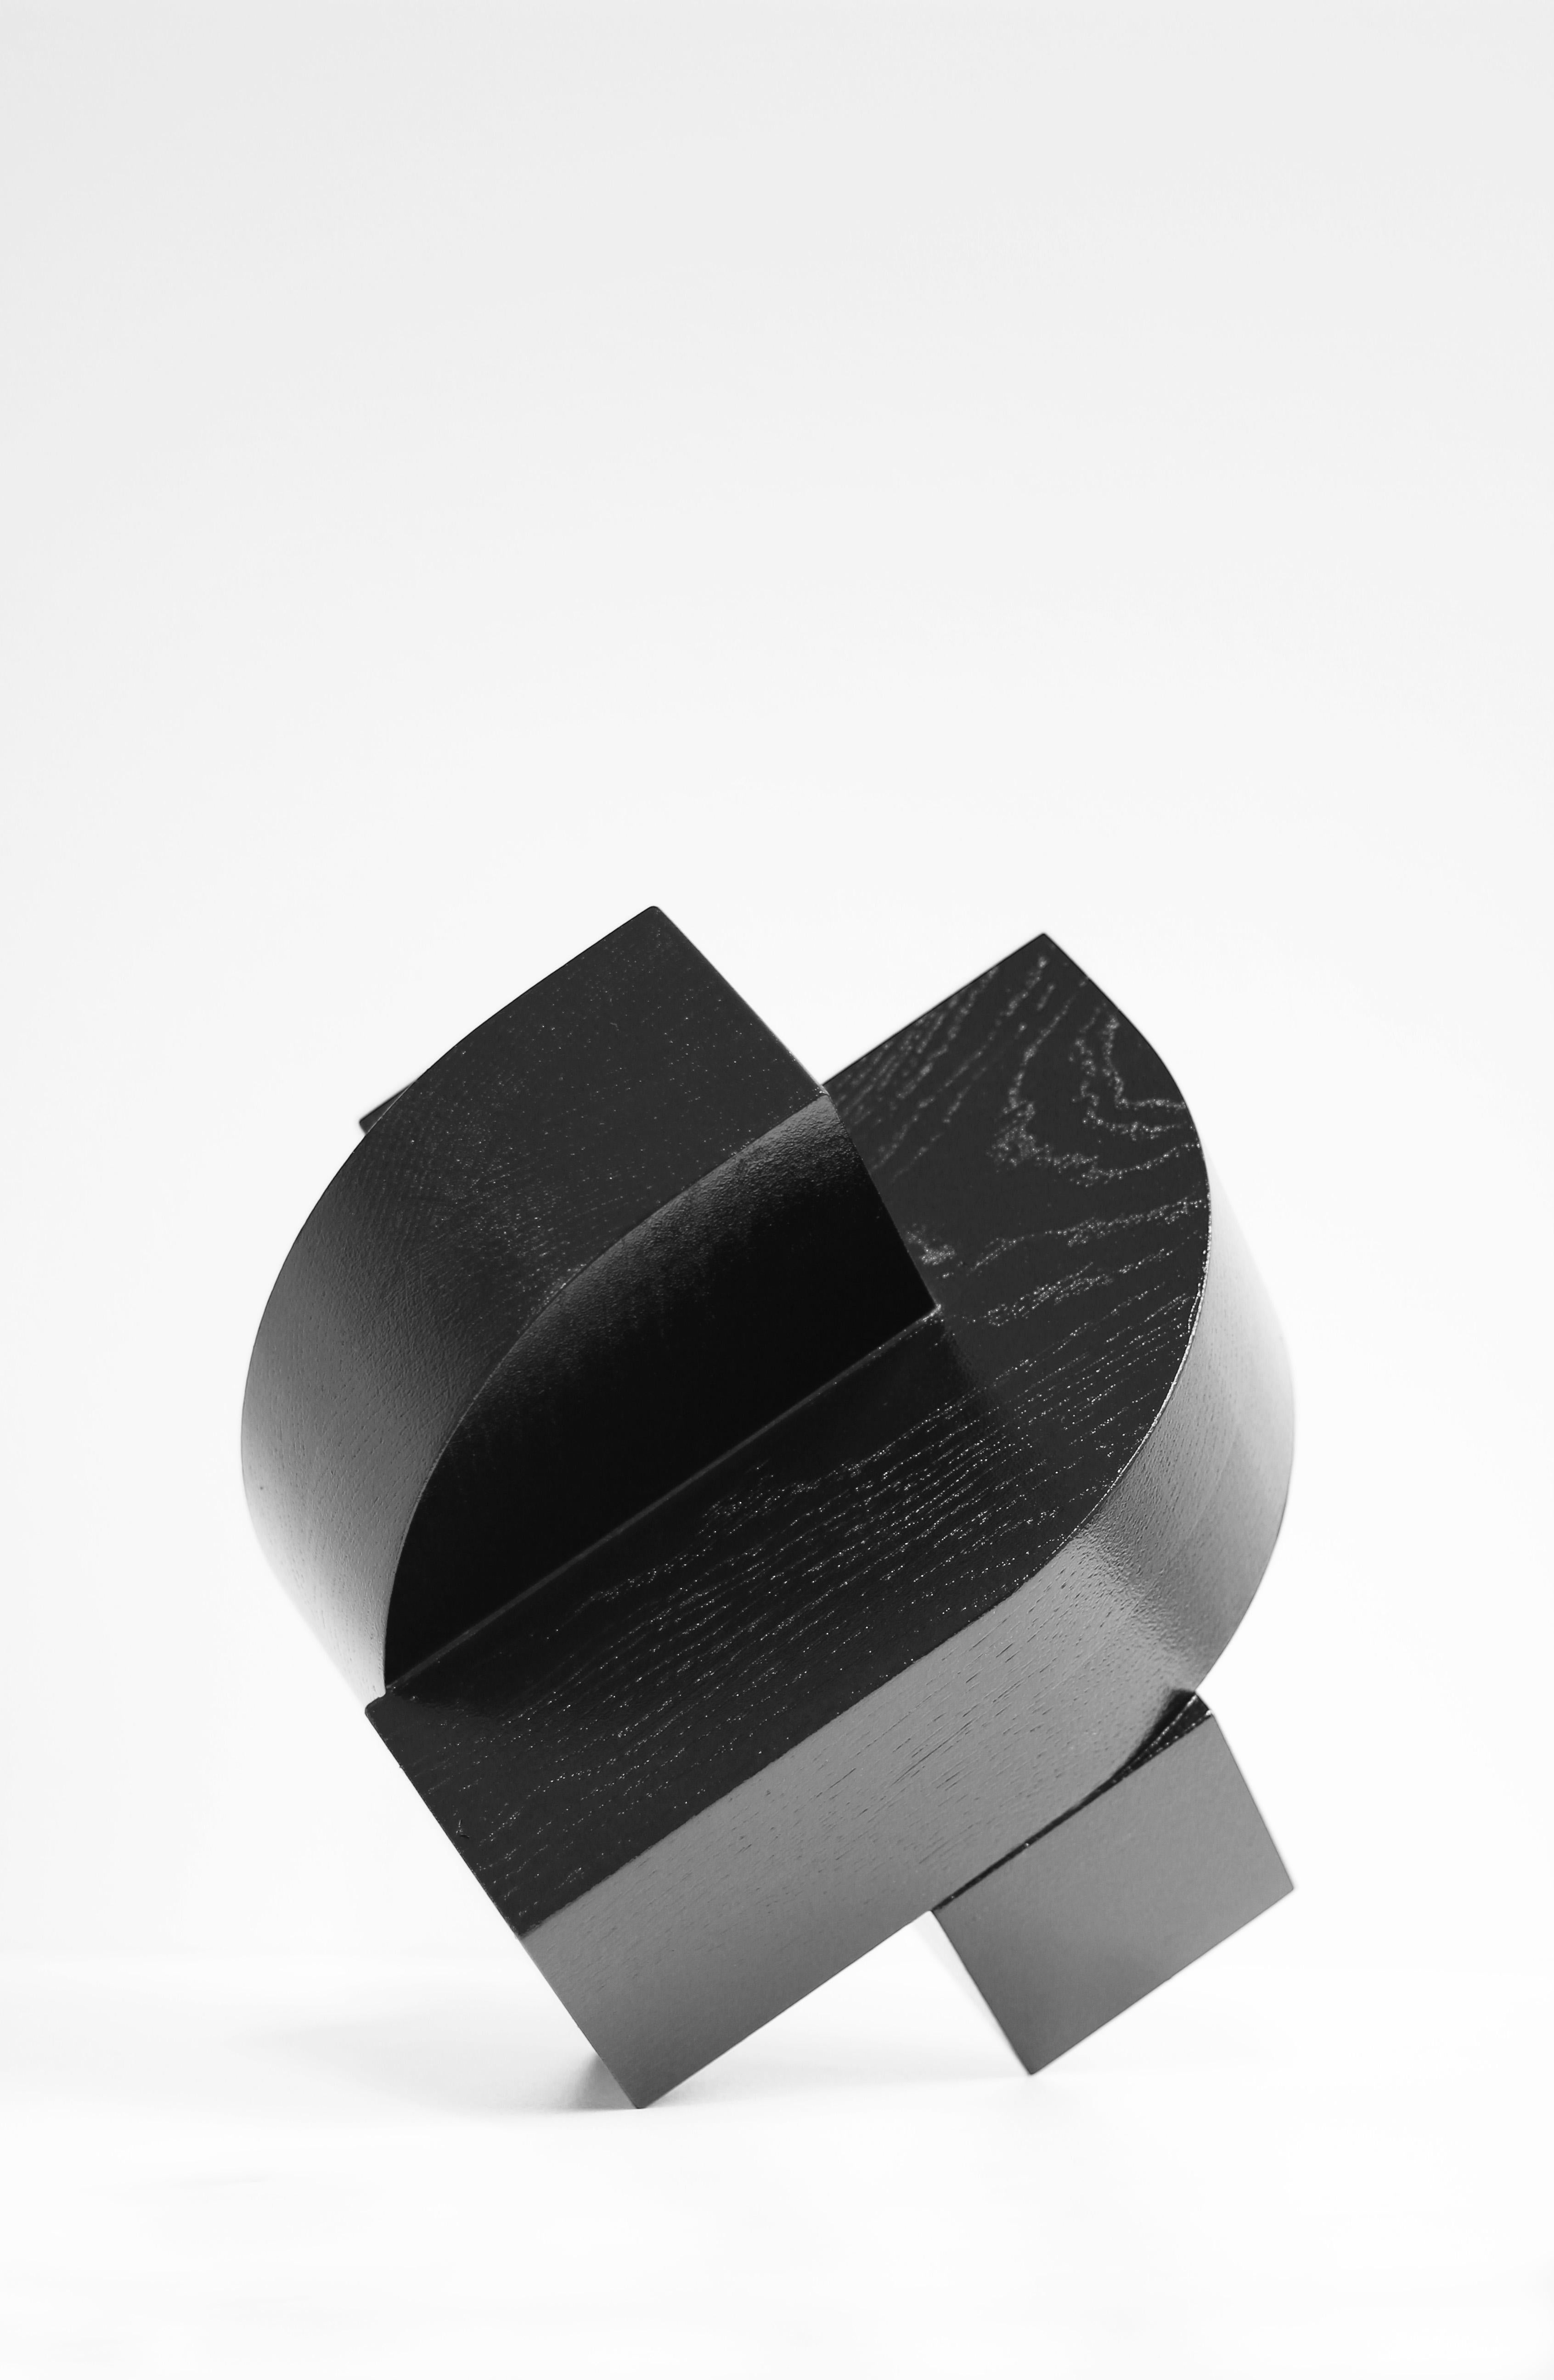 Black solid oak sculpture, X4 J, by Dutch Studio Verbaan For Sale 2